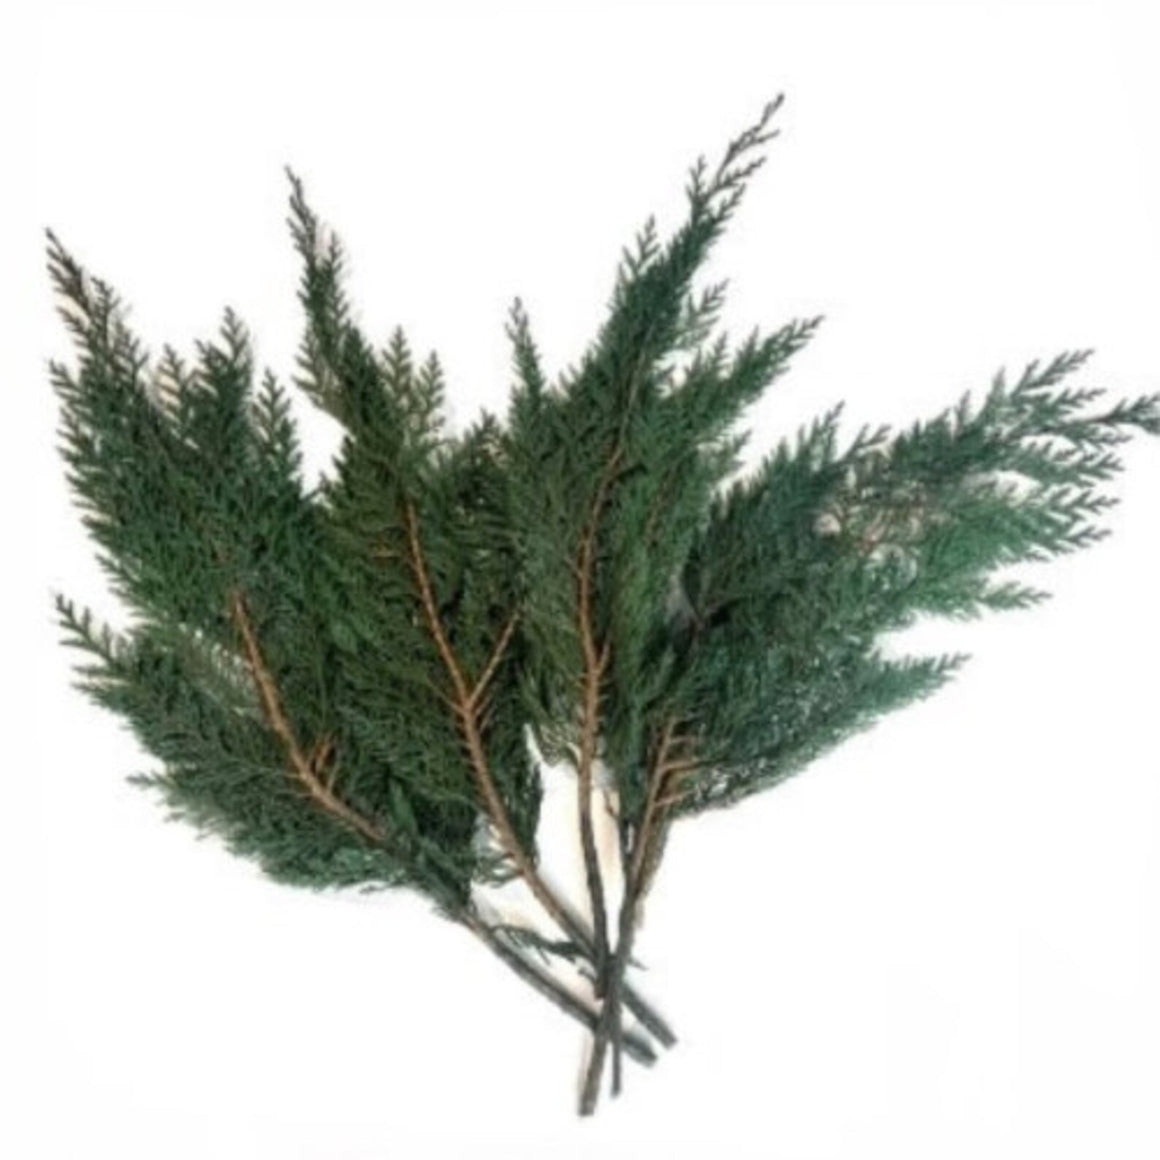 Cedar preserved green branches